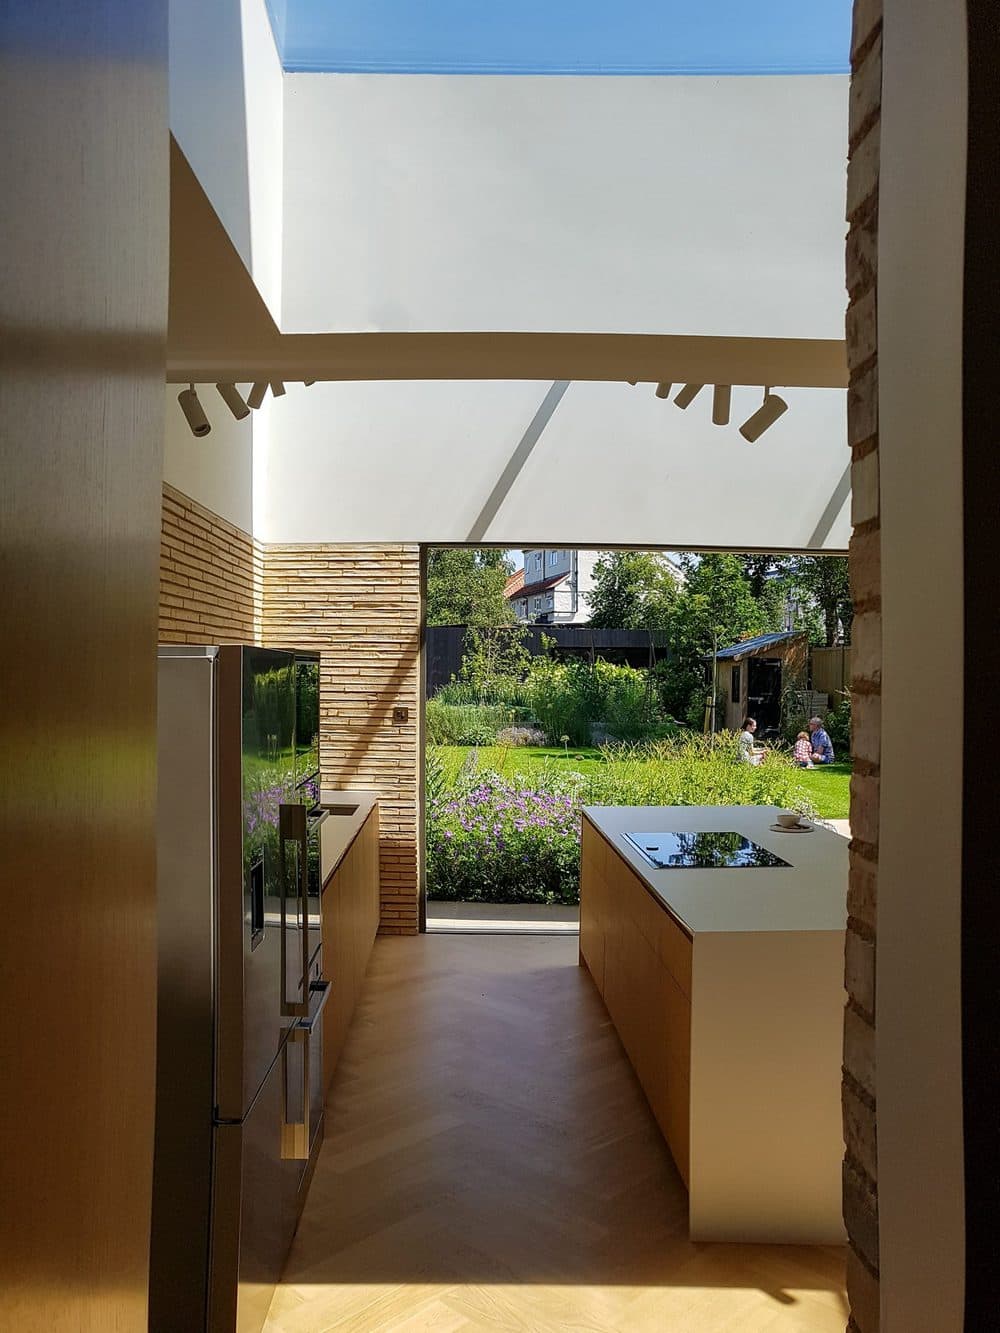 Sun Slice House by Neil Dusheiko Architects